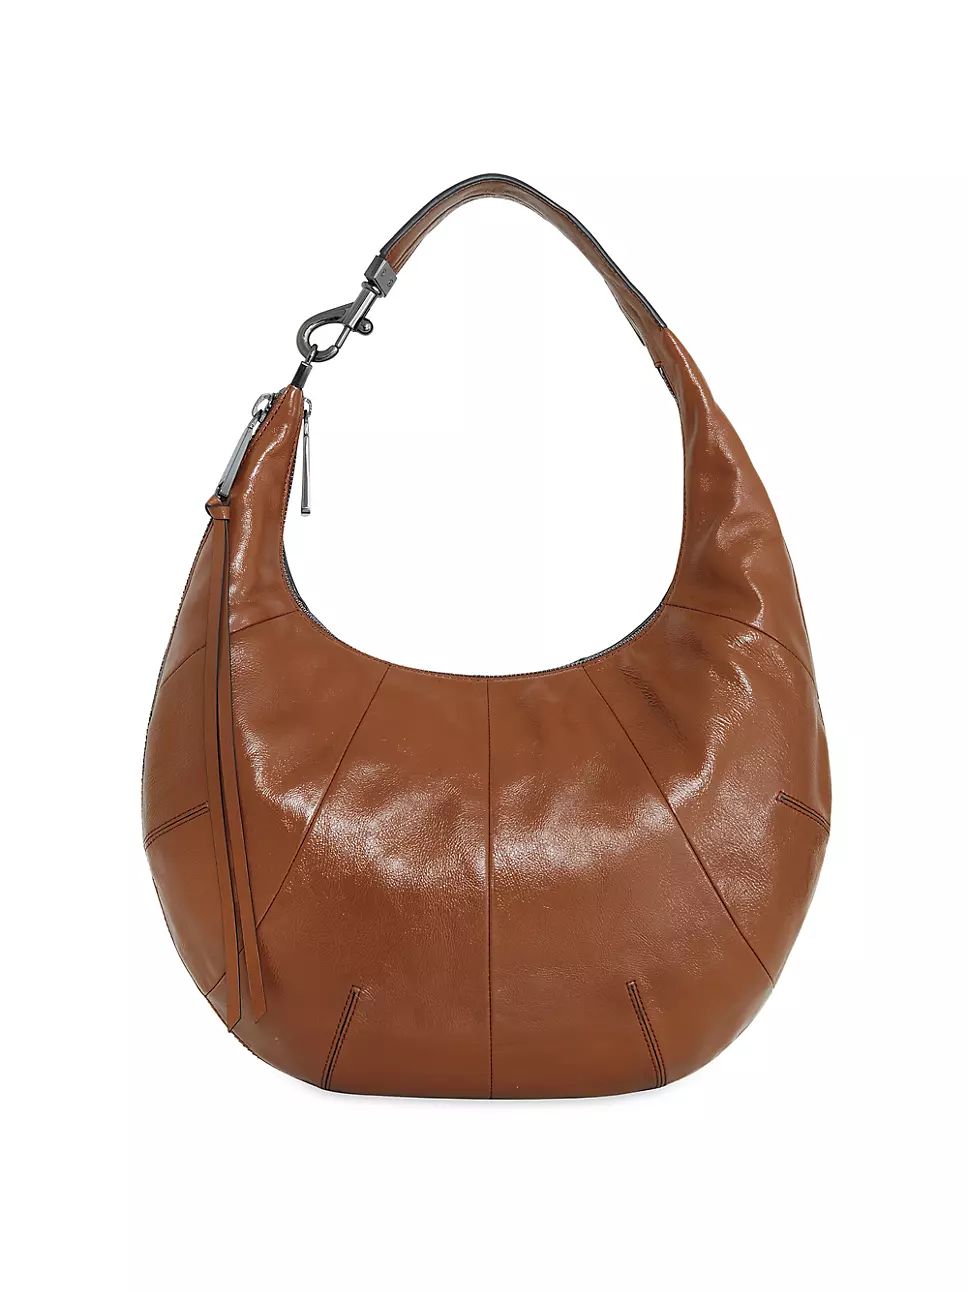 Rebecca Minkoff


Medium Leather Croissant Shoulder Bag



4.9 out of 5 Customer Rating | Saks Fifth Avenue